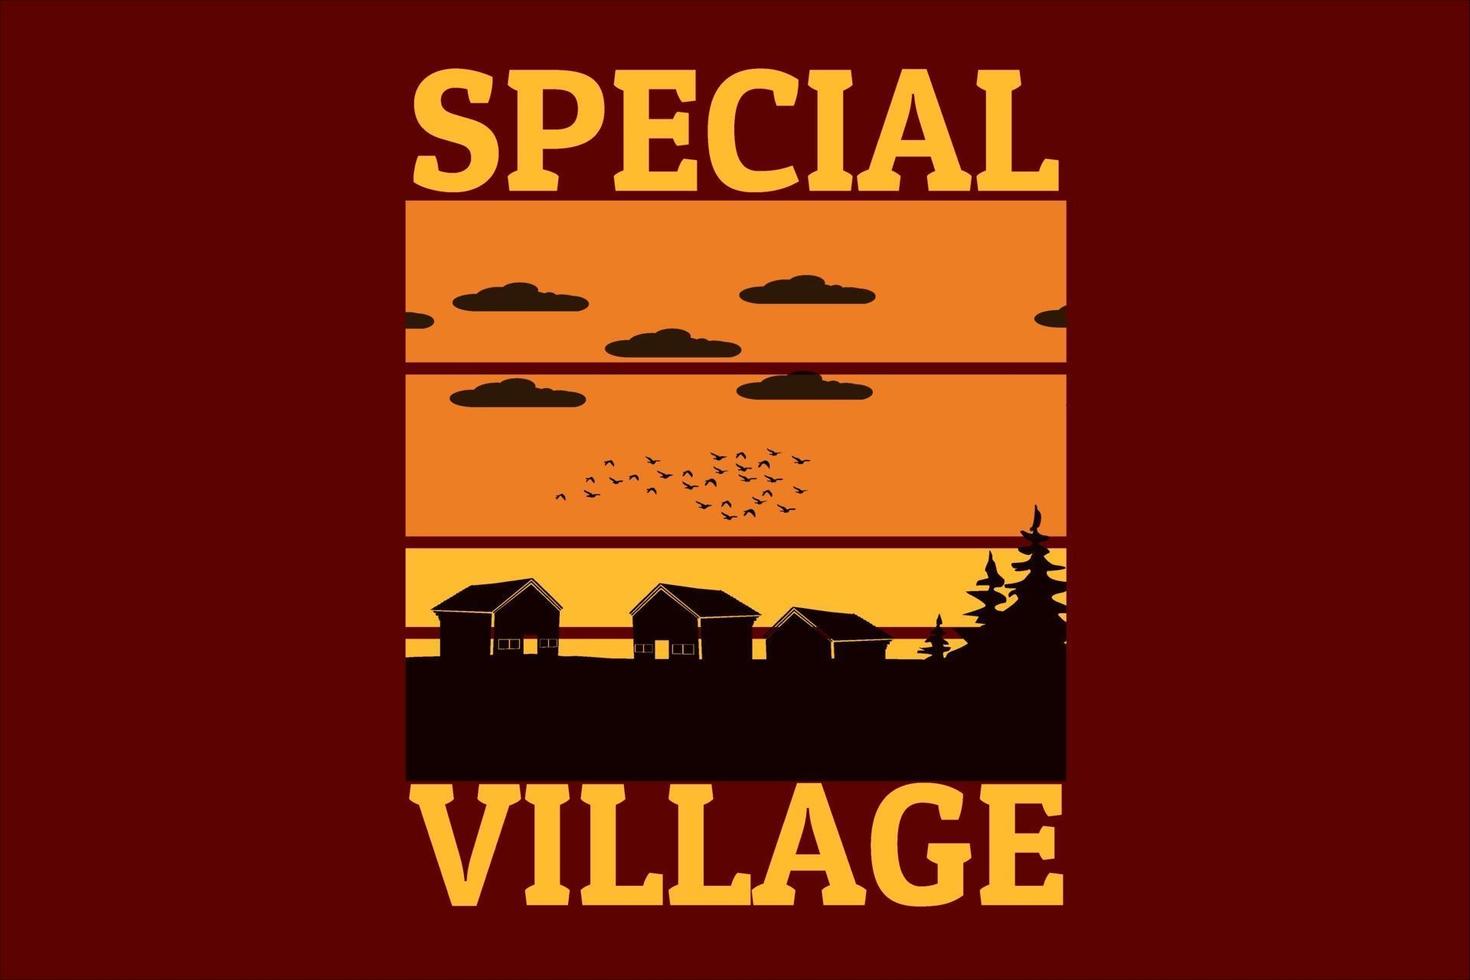 village special silhouette retro design vector